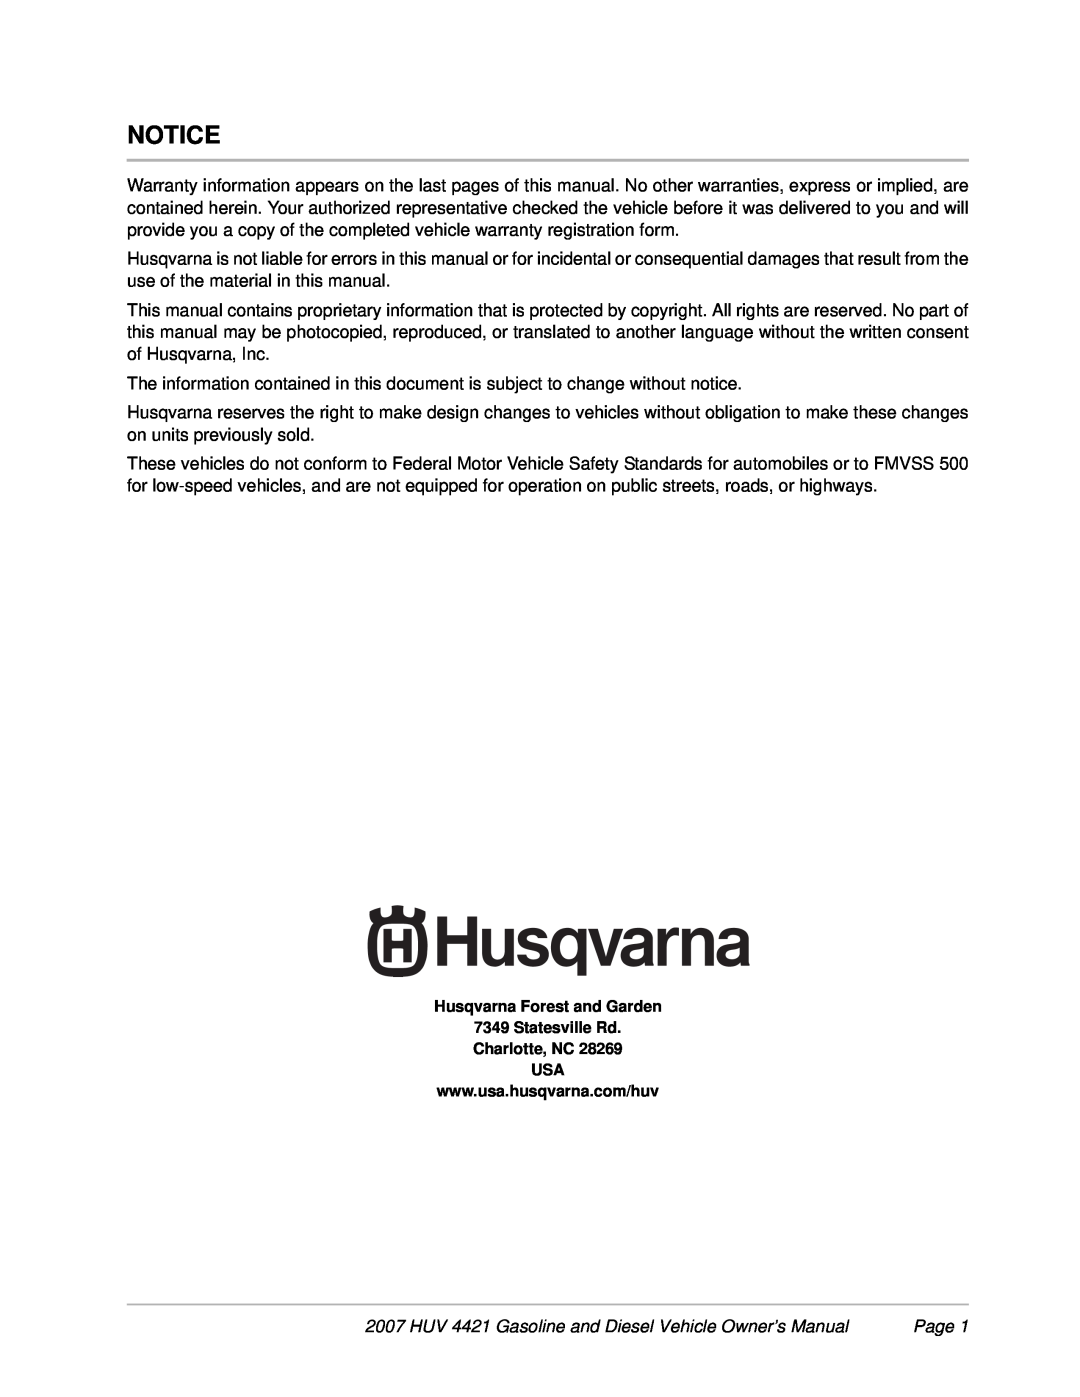 Husqvarna HUV 4421-D / DXP, HUV 4421-G / GXP owner manual HUV 4421 Gasoline and Diesel Vehicle Owner’s Manual, Page 